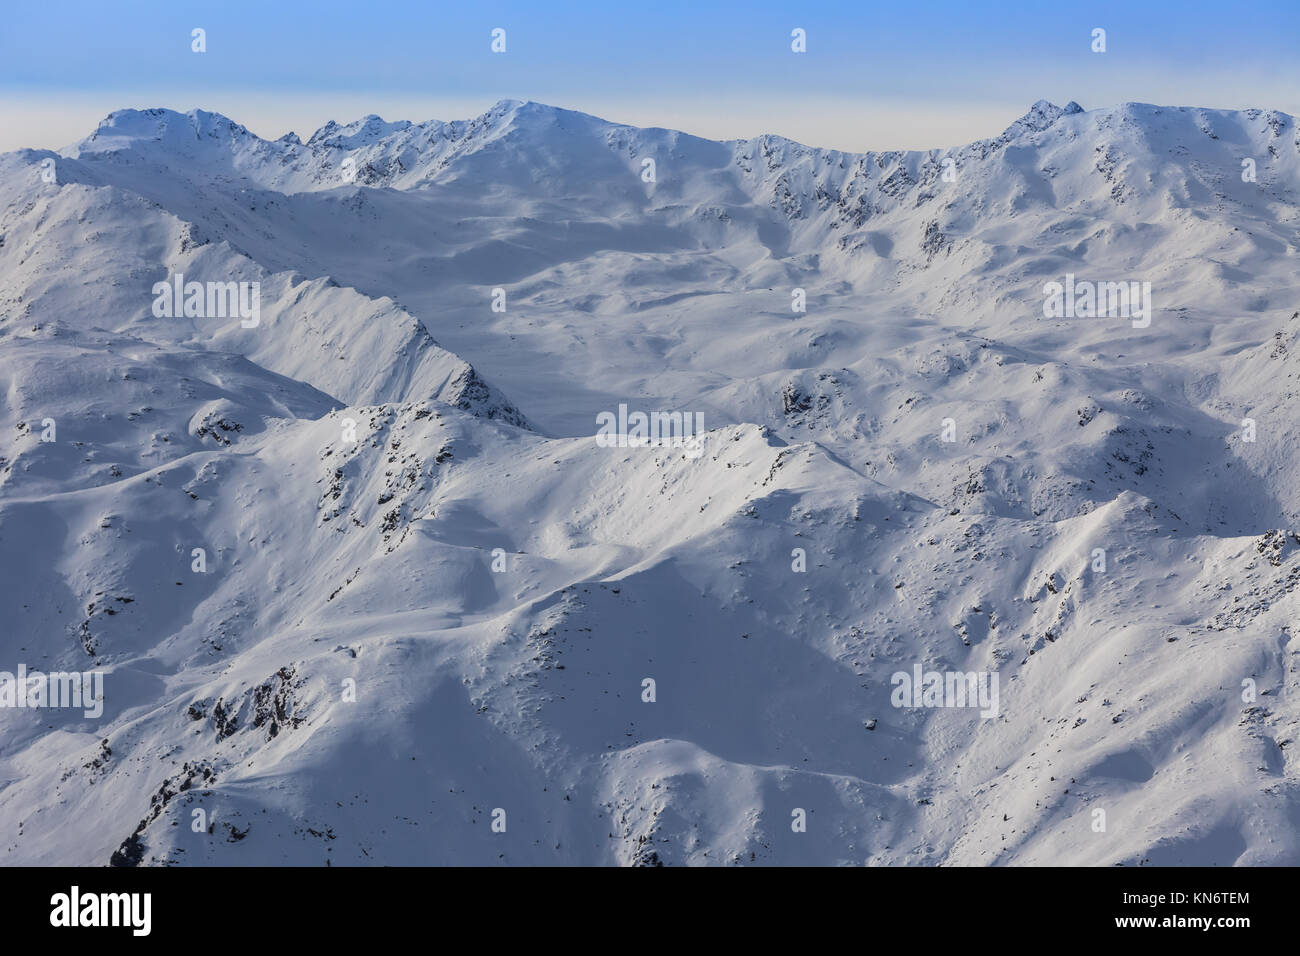 winter mountain landscape. Region Axamer Lizum, Austria Stock Photo